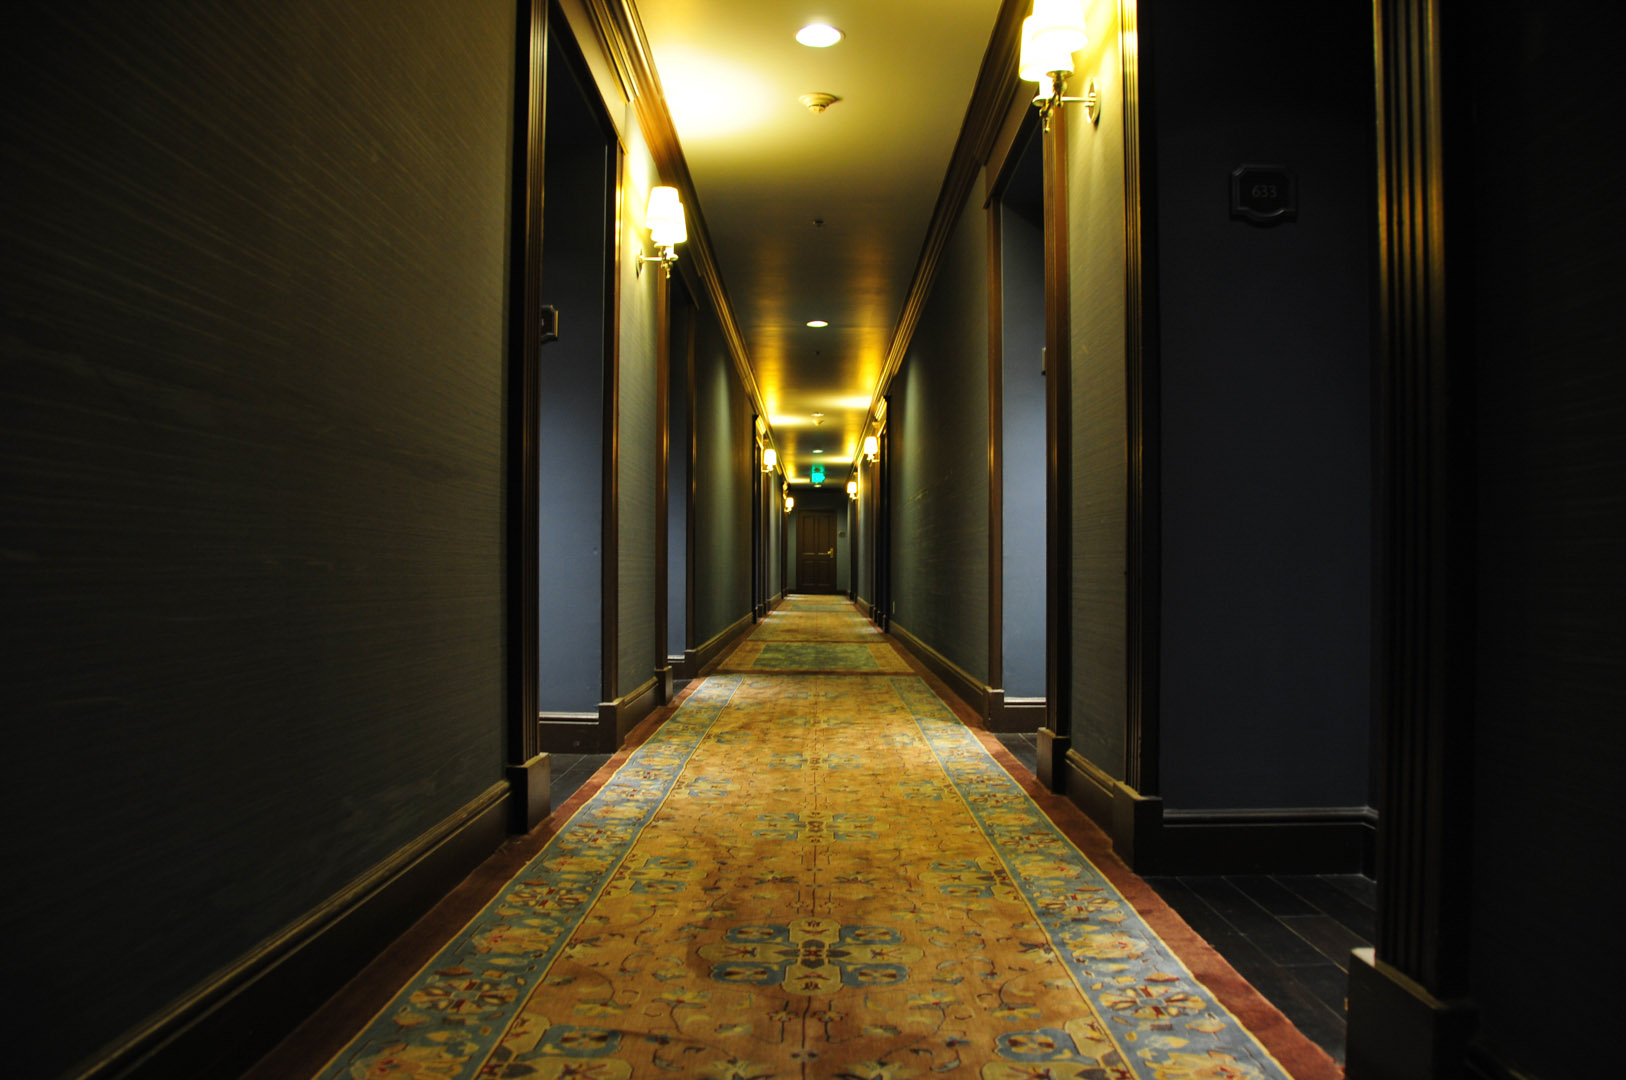 hotel corridor lobby room private club san diego sd california usa america exit emergency door.jpg